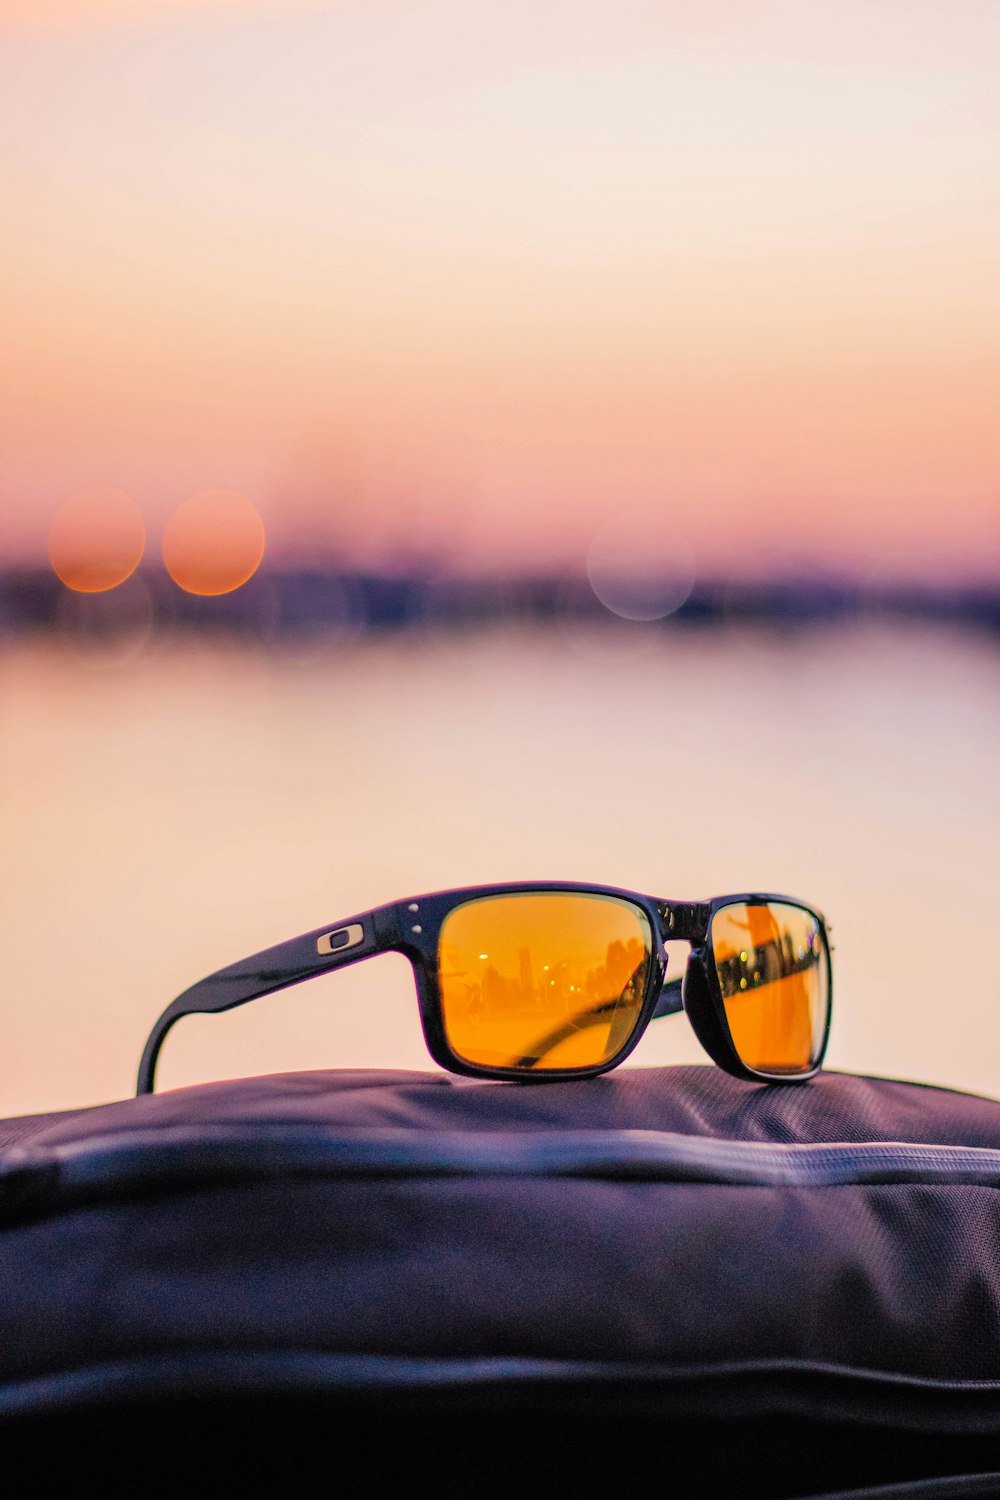 black framed Oakley sunglasses with orange lens photo – Free Glasses Image  on Unsplash